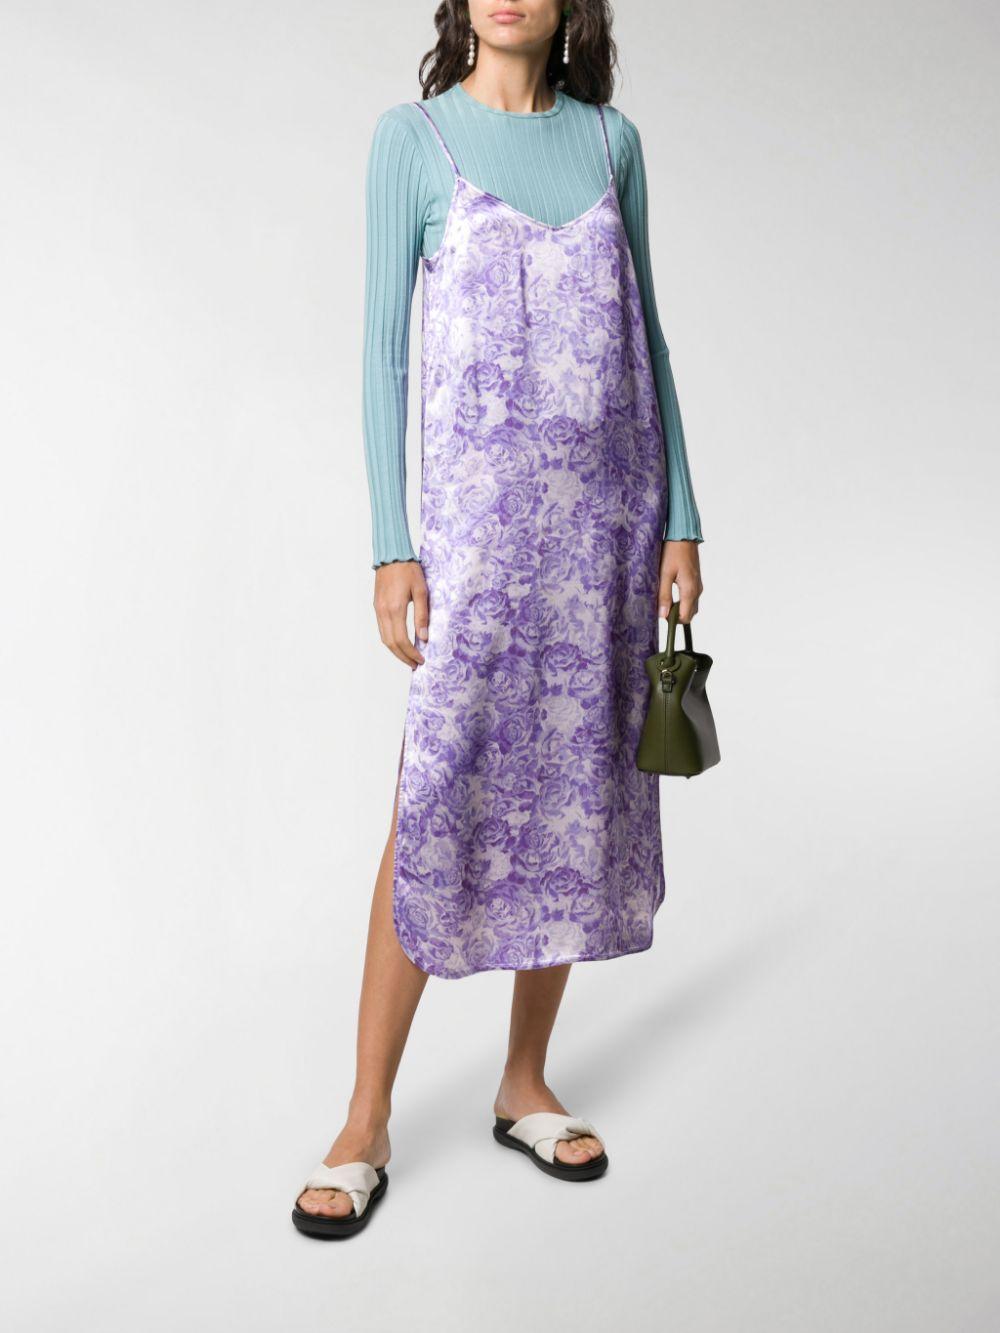 Ganni Heavy Satin Printed Slip Dress in Floral (Purple) - Lyst